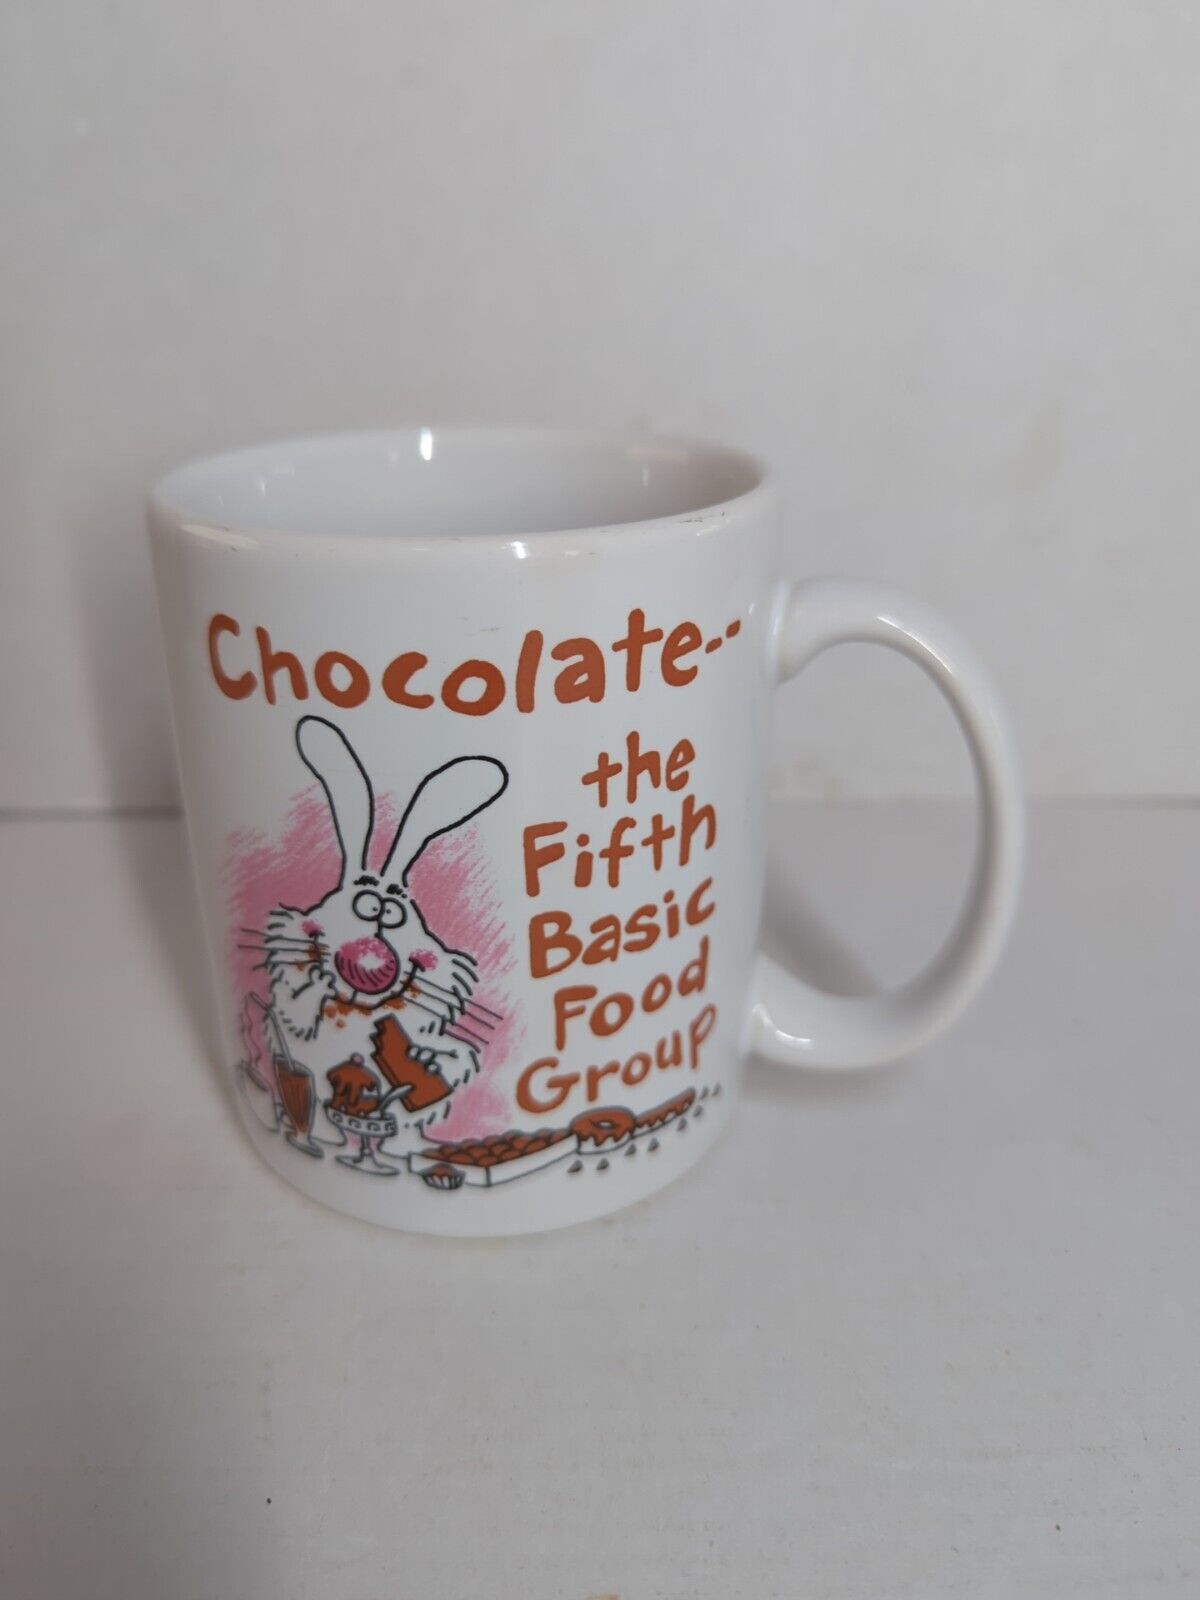 Hallmark Shoebox Greetings “Chocolate the Fifth Basic Food Group” Mug Cup New